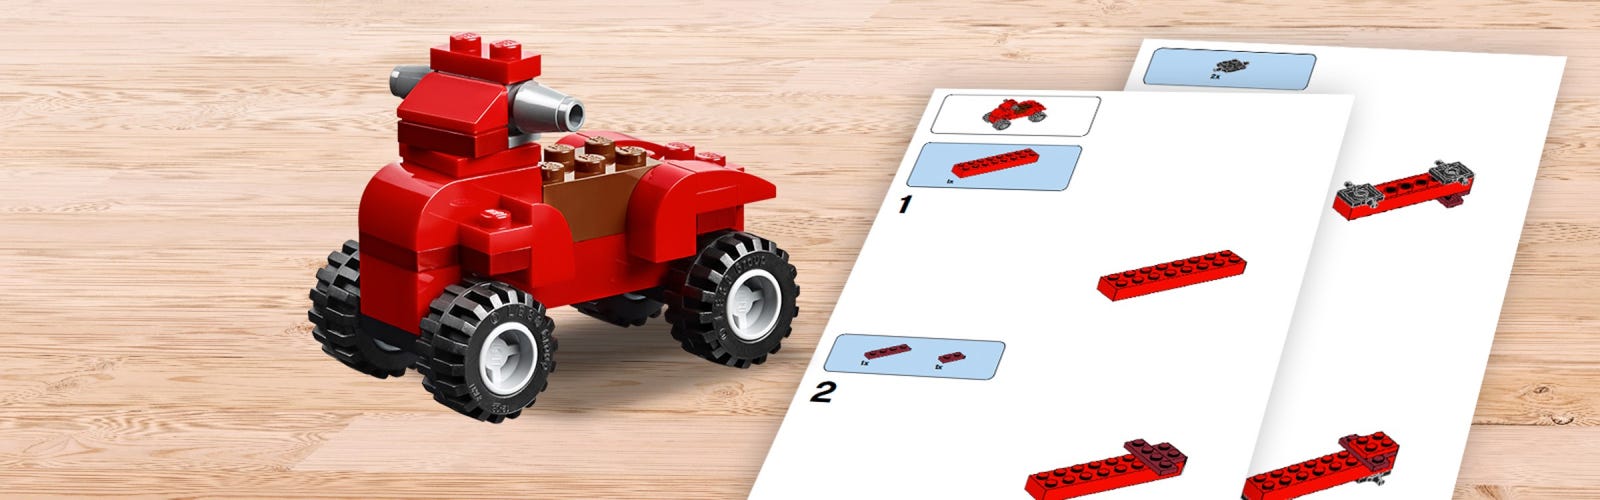 LEGO® Classic toys - Free building instructions | LEGO® Shop US